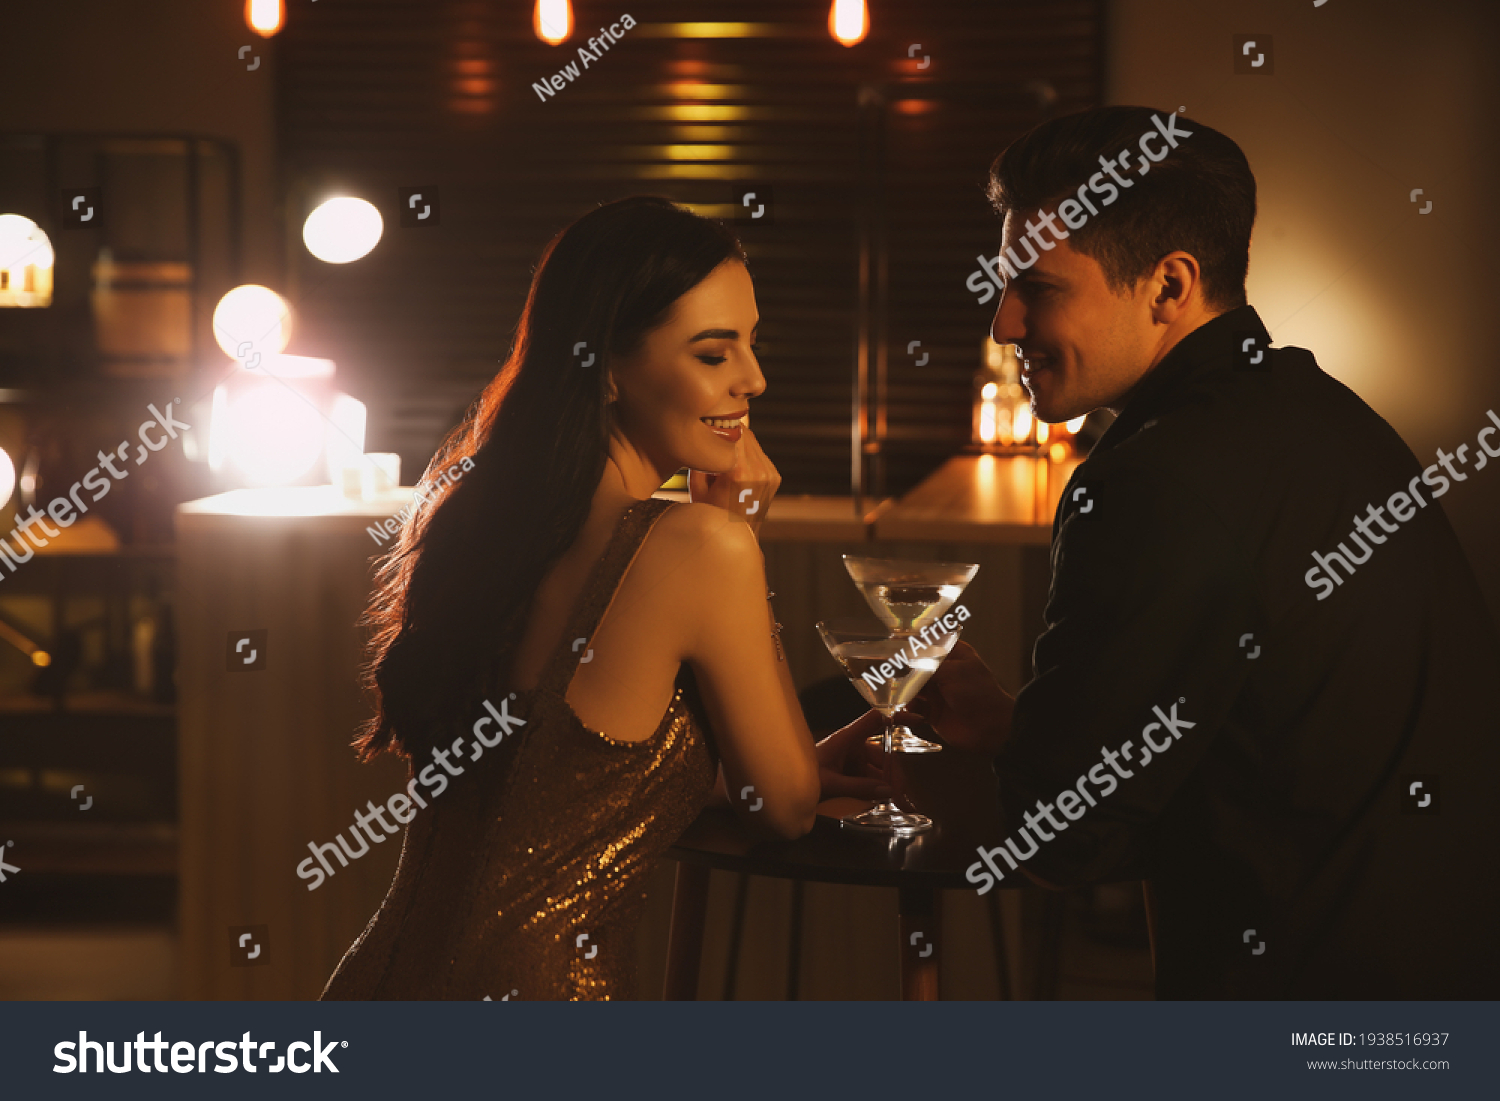 antone silva add wife flirts in bar photo